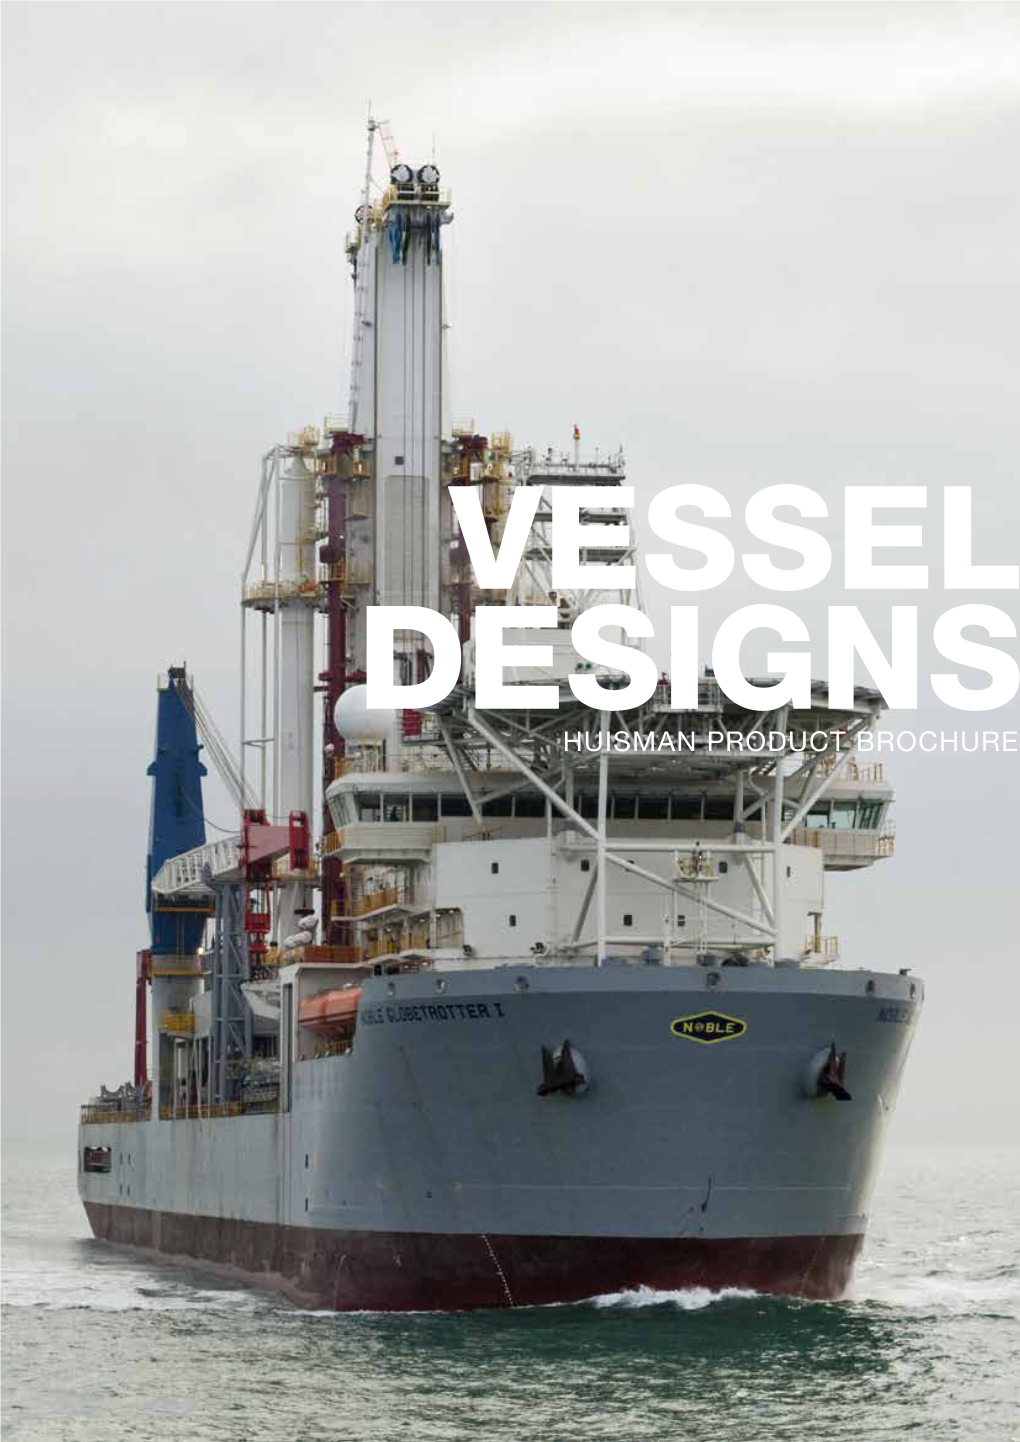 Huisman Product Brochure Vessel Designs